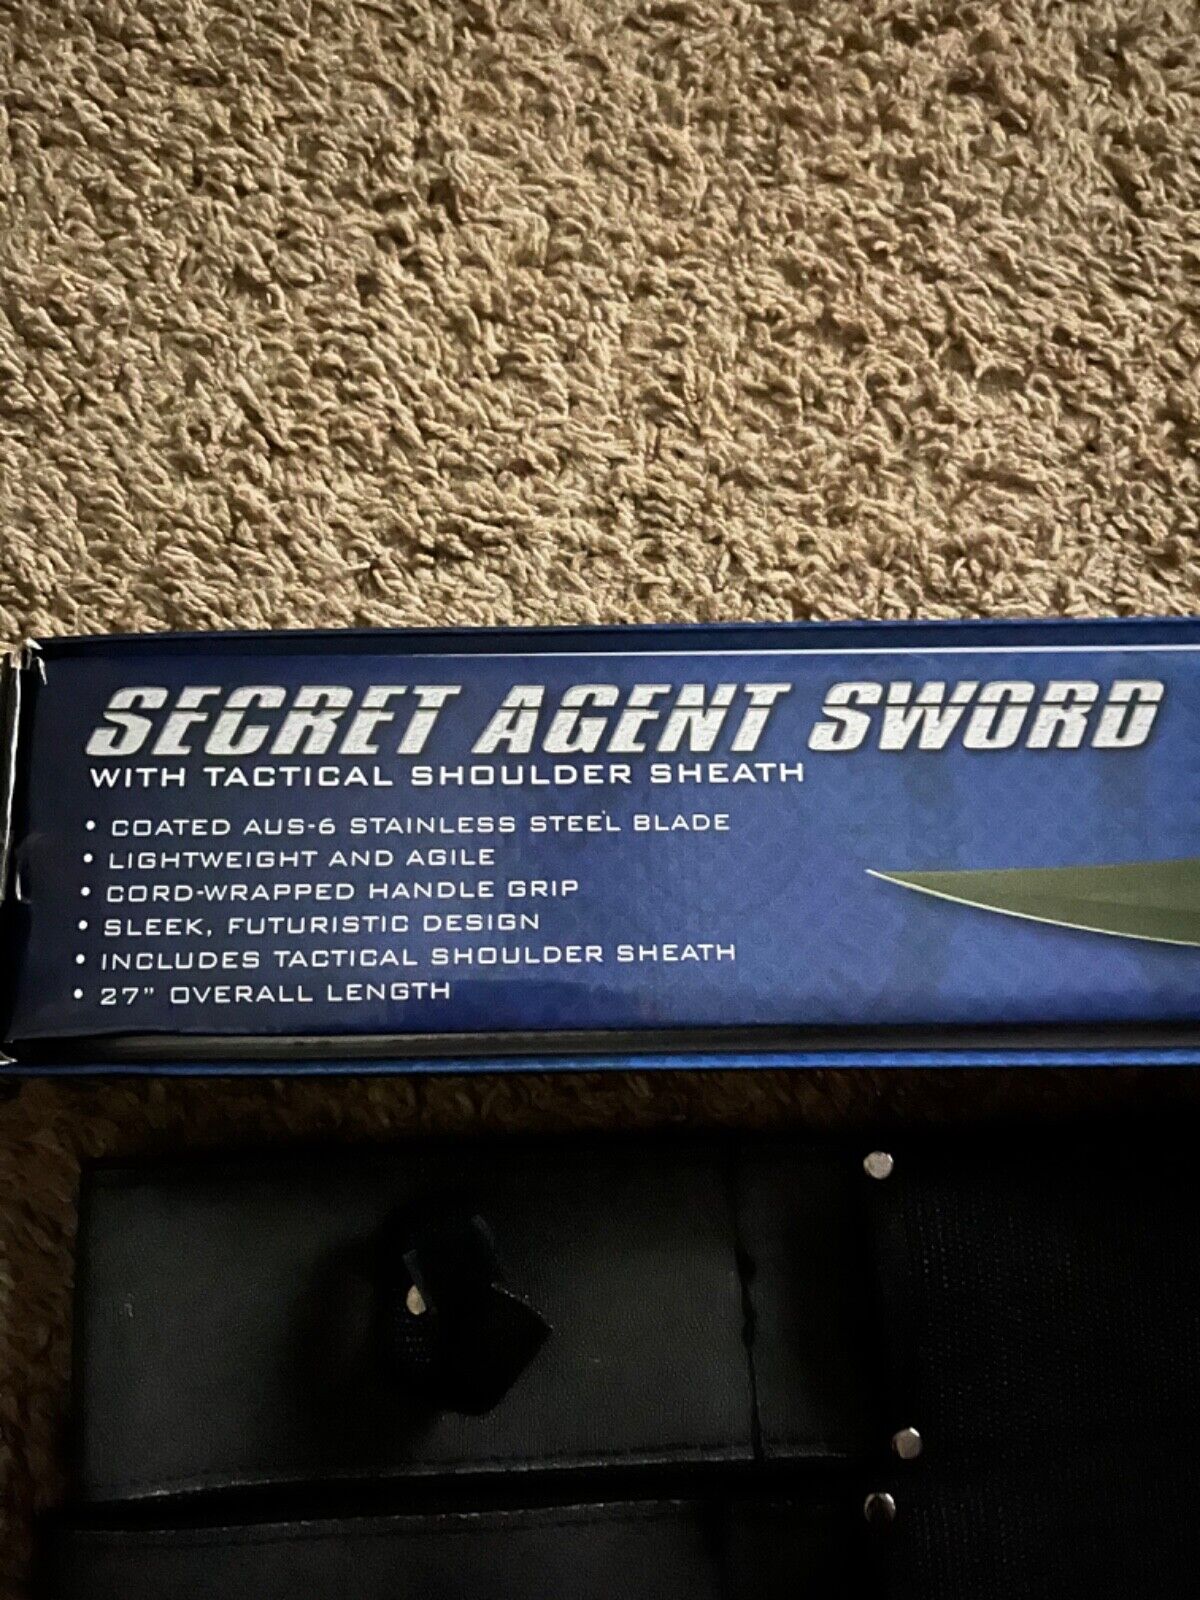 Secret Agent Twin Swords with tactical shoulder Sheath, swords are black